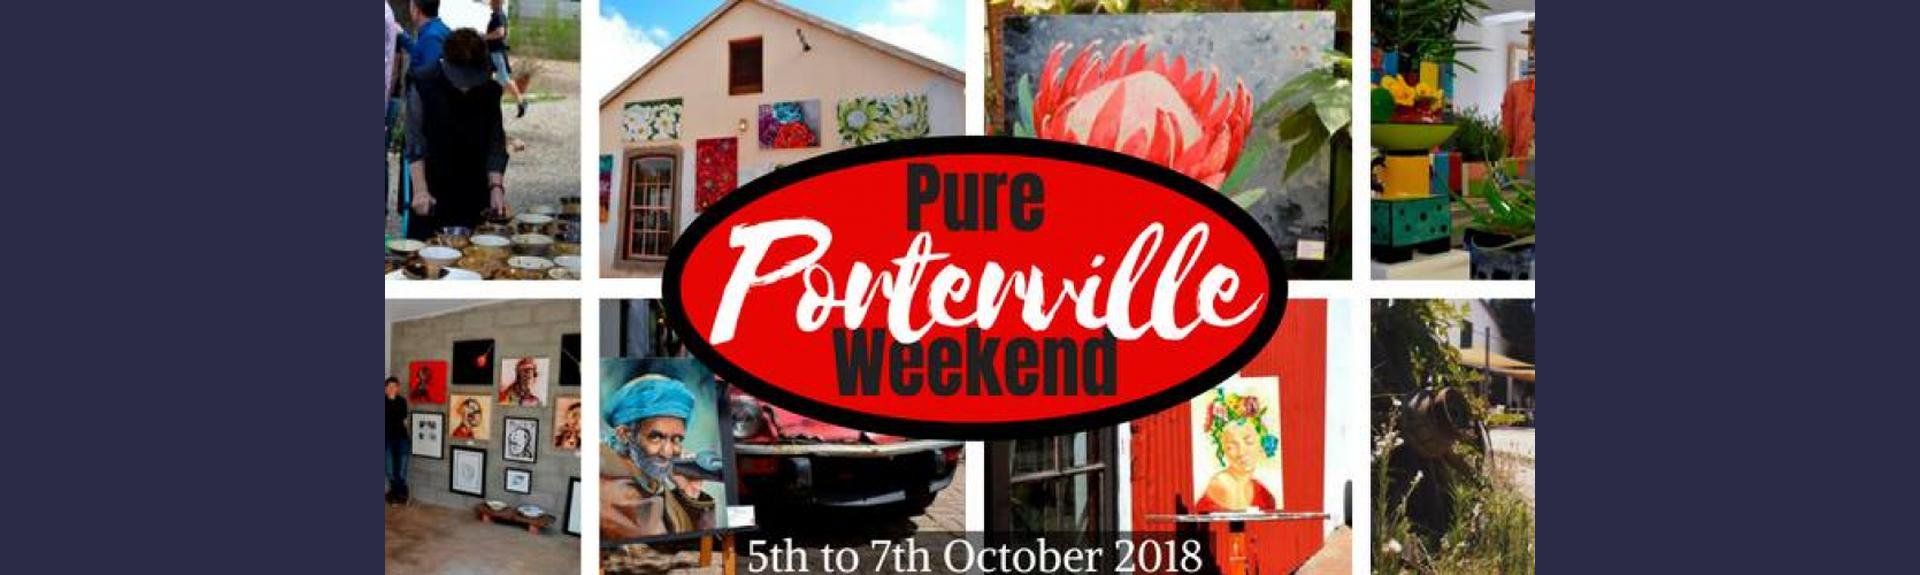 Pure Porterville Weekend